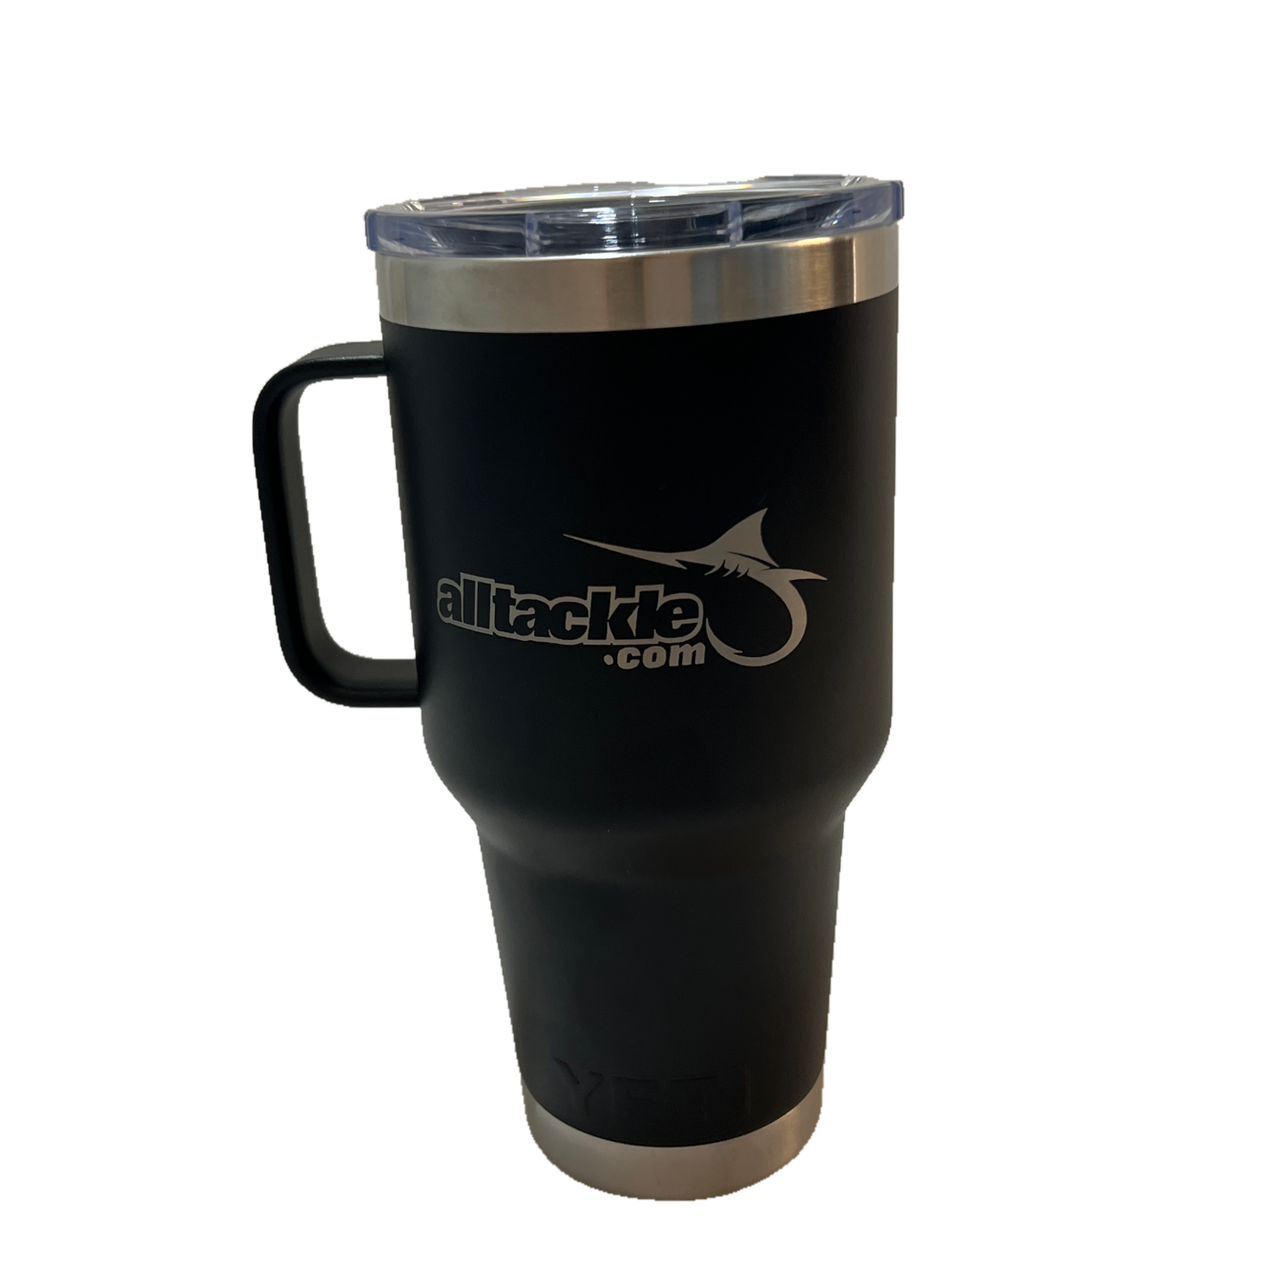 Yeti Rambler 30 oz Travel Mug with Stronghold Lid - Black